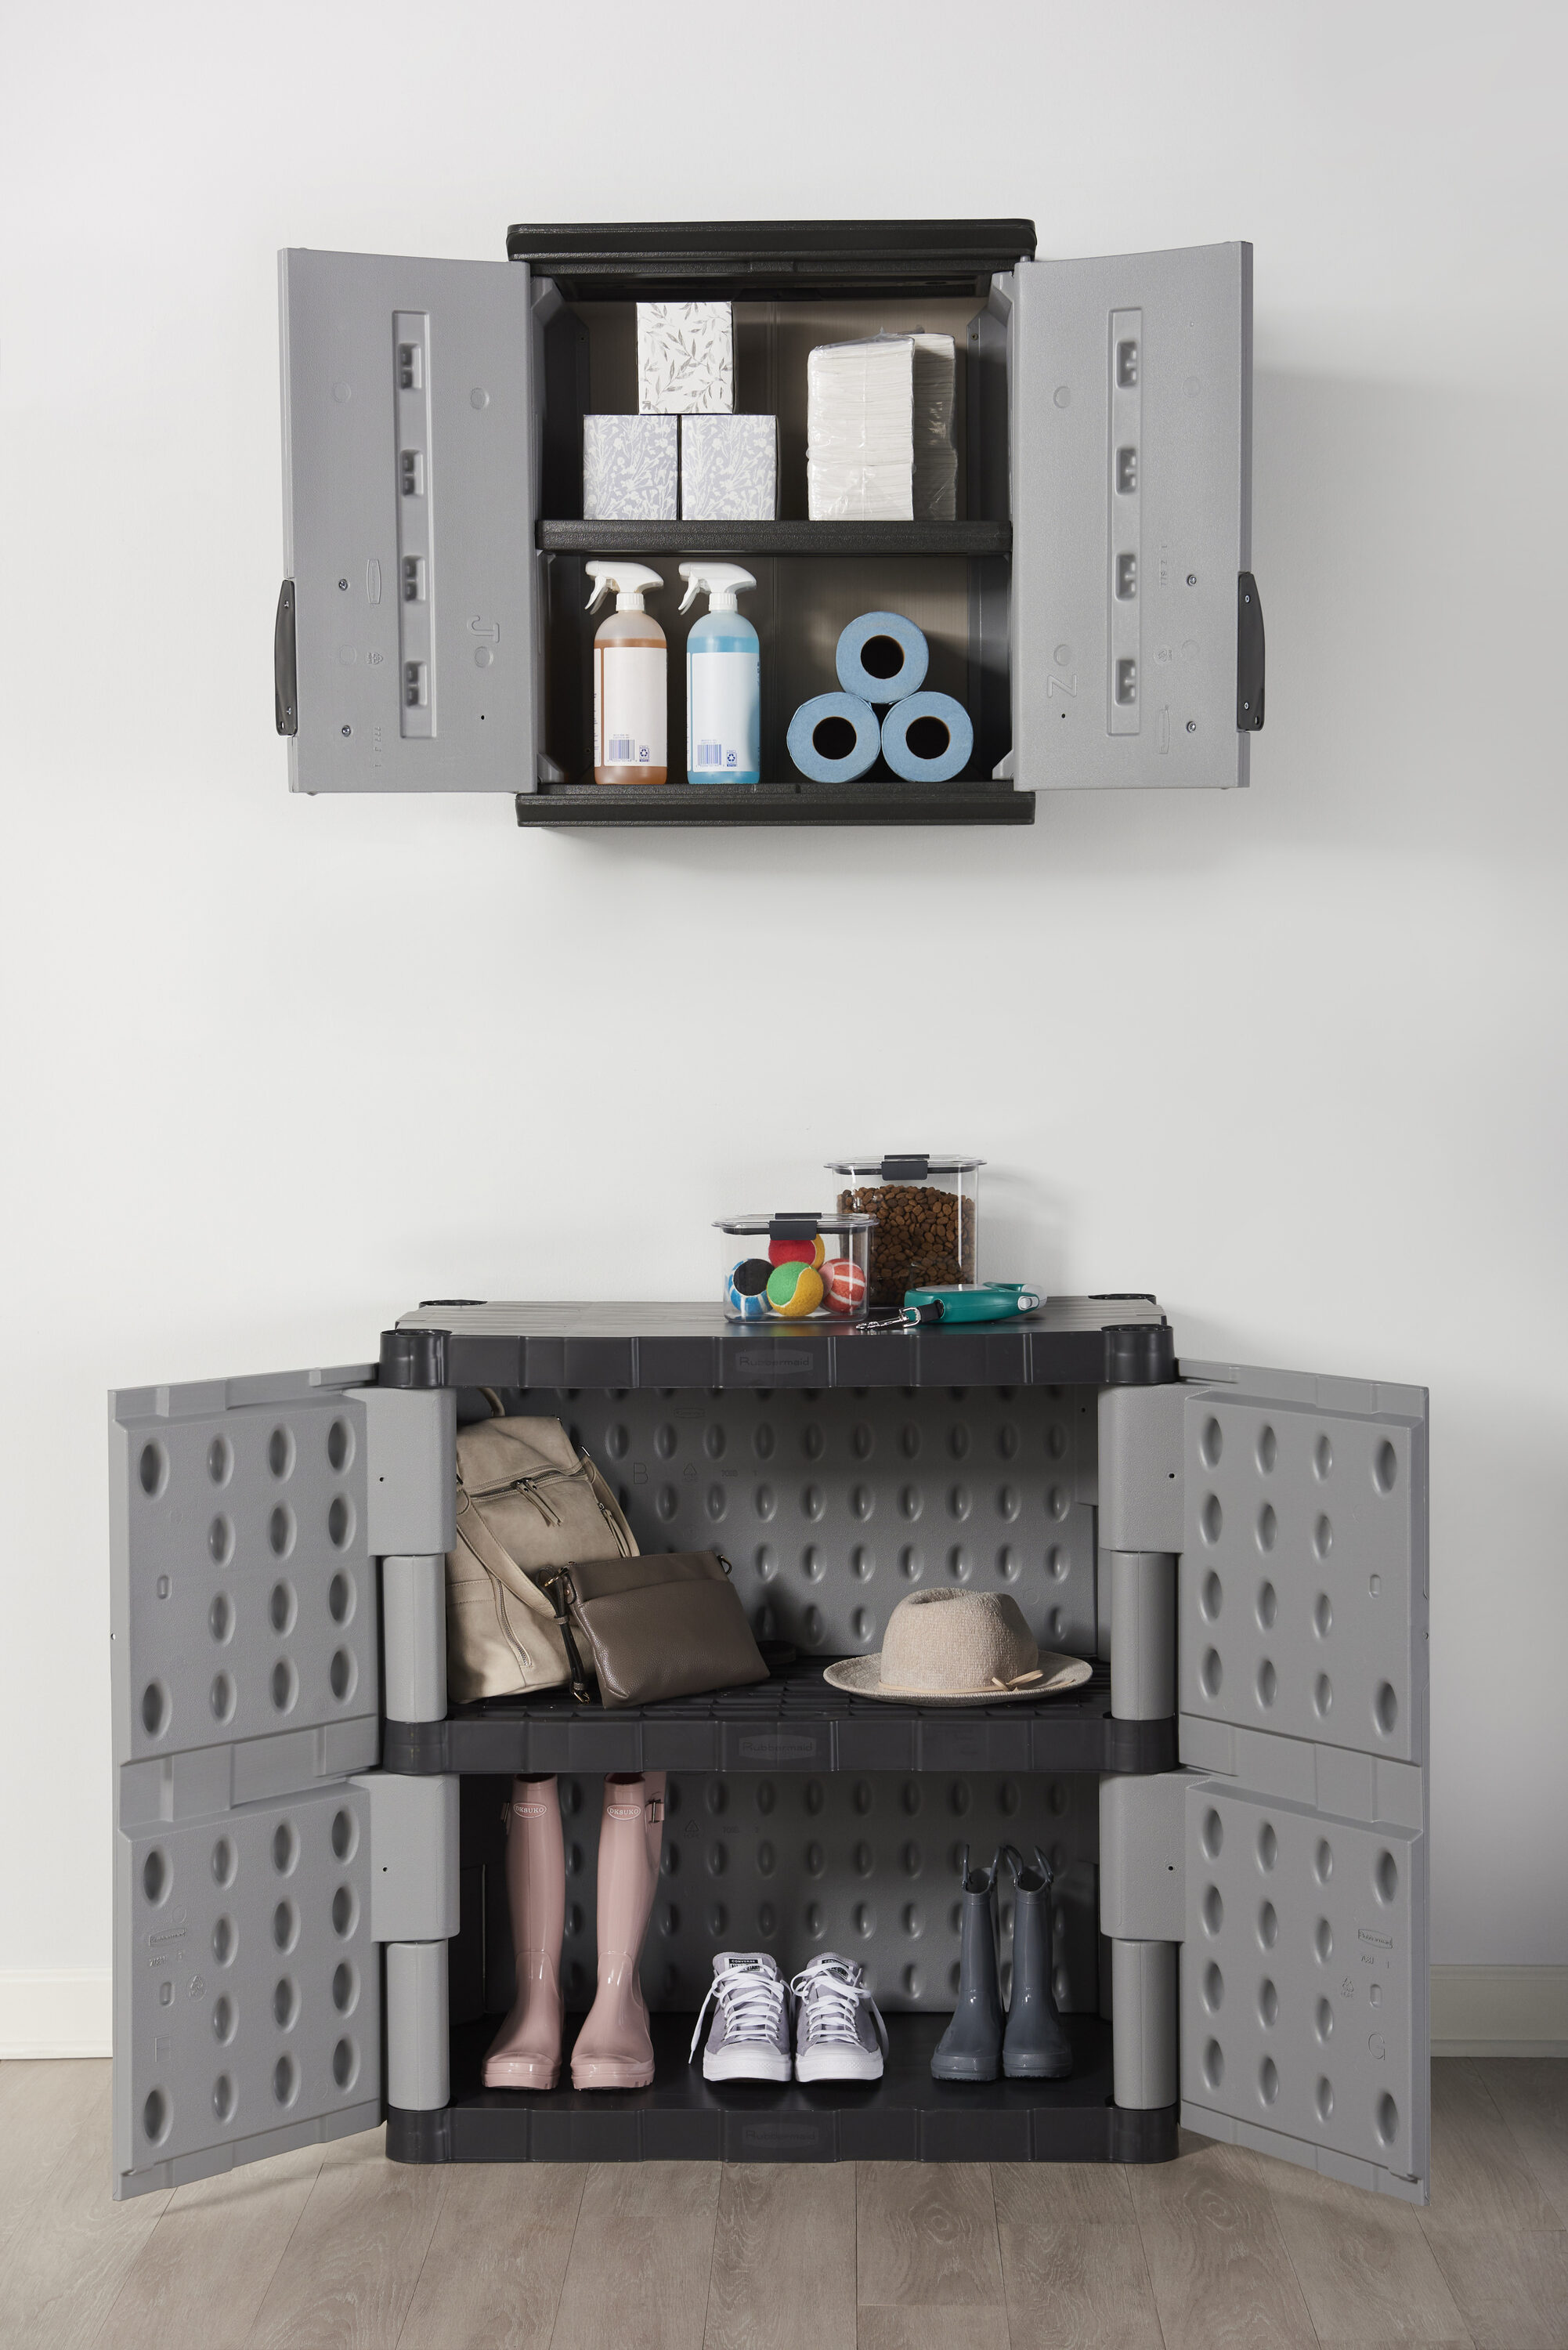 Rubbermaid Double-Door Storage Base Cabinet - Gray/Black